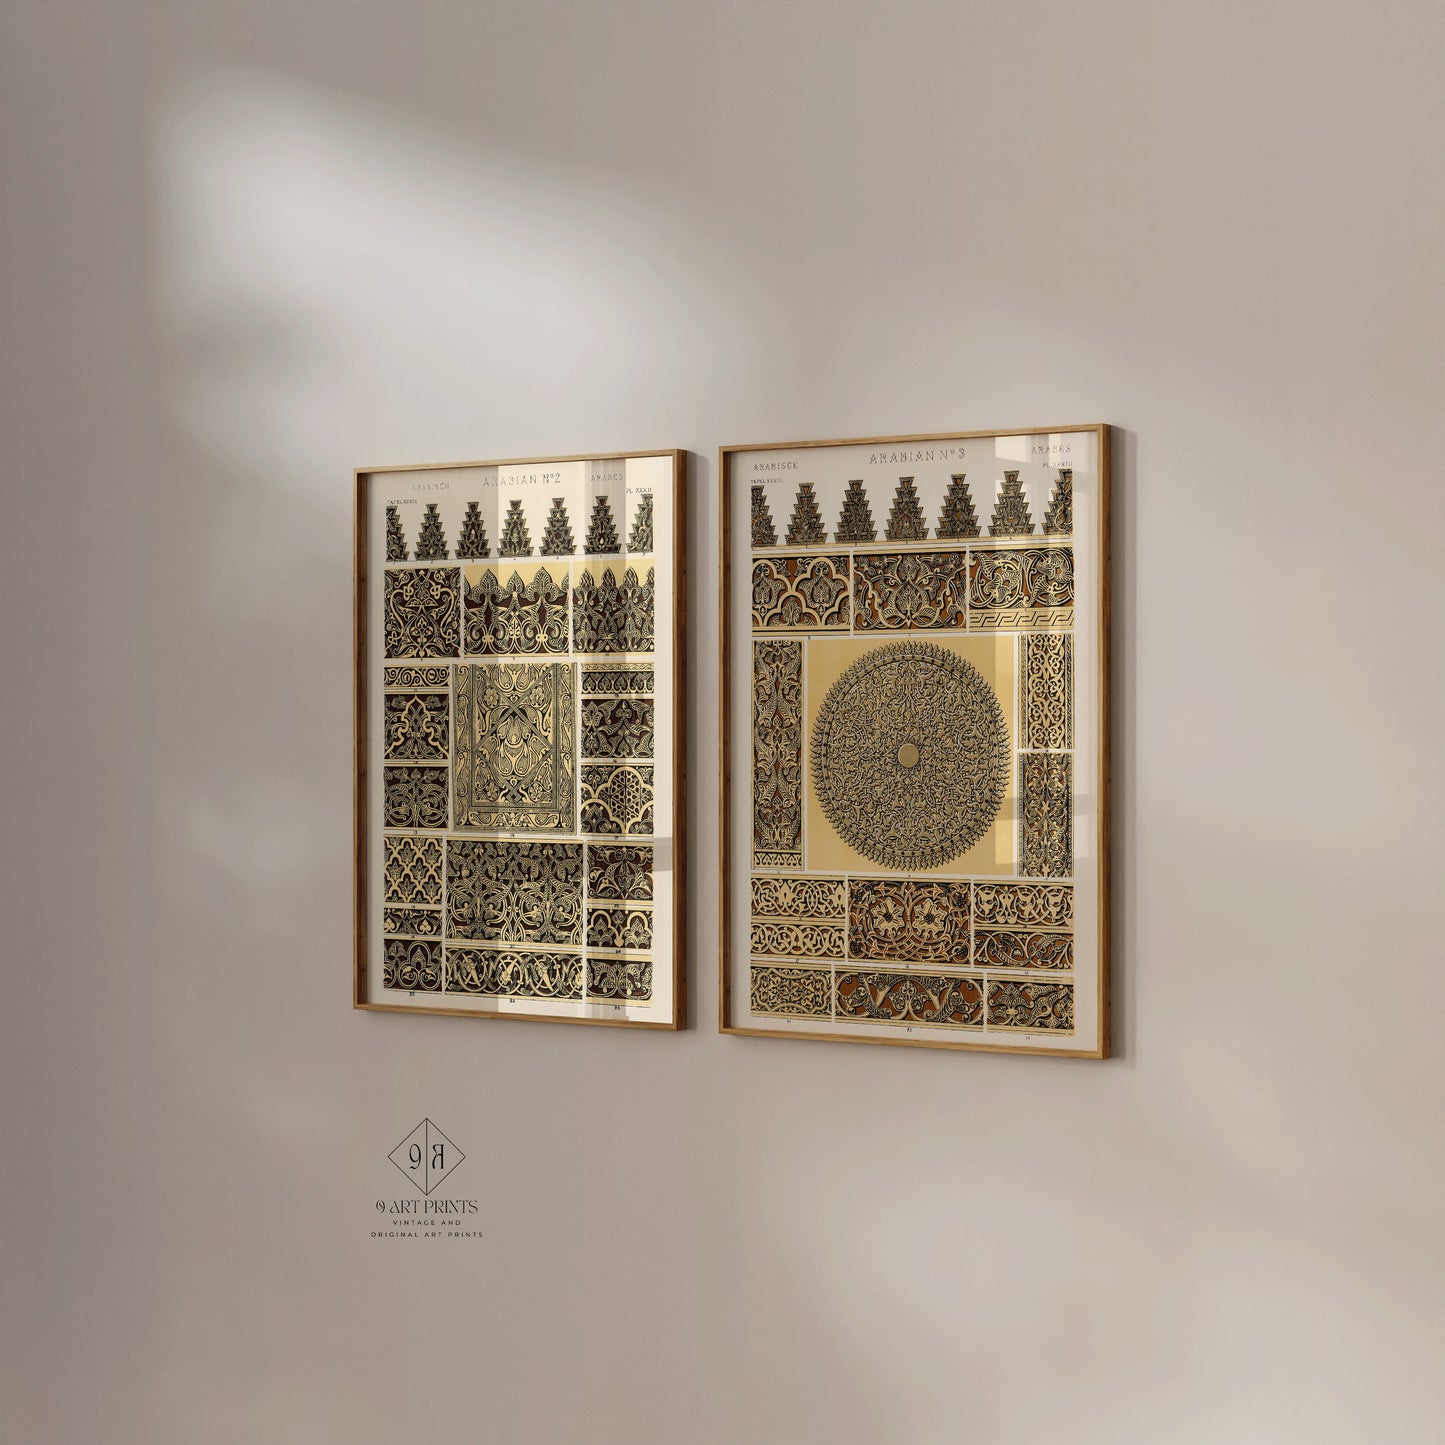 Set of 2 OWEN JONES ARABIAN prints Museum Exhibition Poster Vintage Pattern Framed Ready to Hang Home Office Decor Housewarming Gift Idea